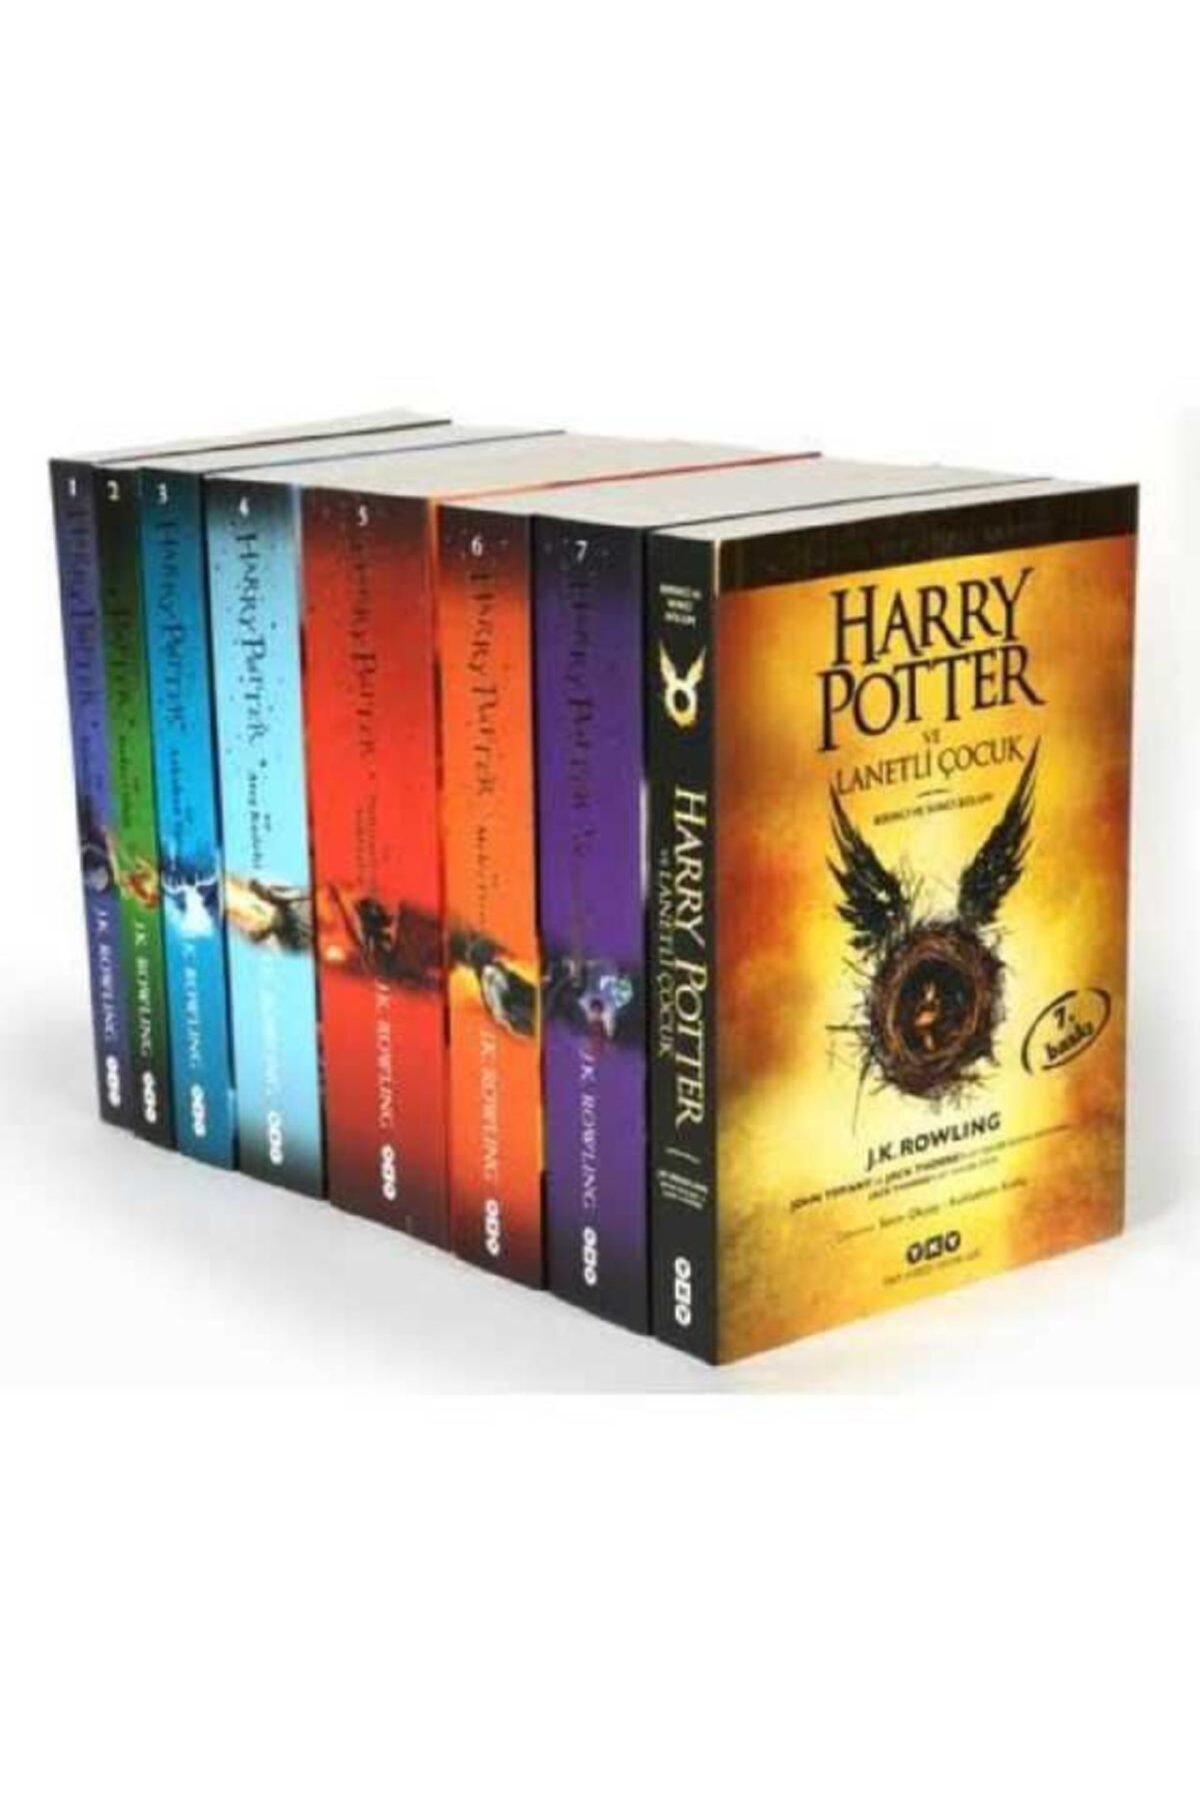 Harry potter books set of 8, Hobbies & Toys, Books & Magazines